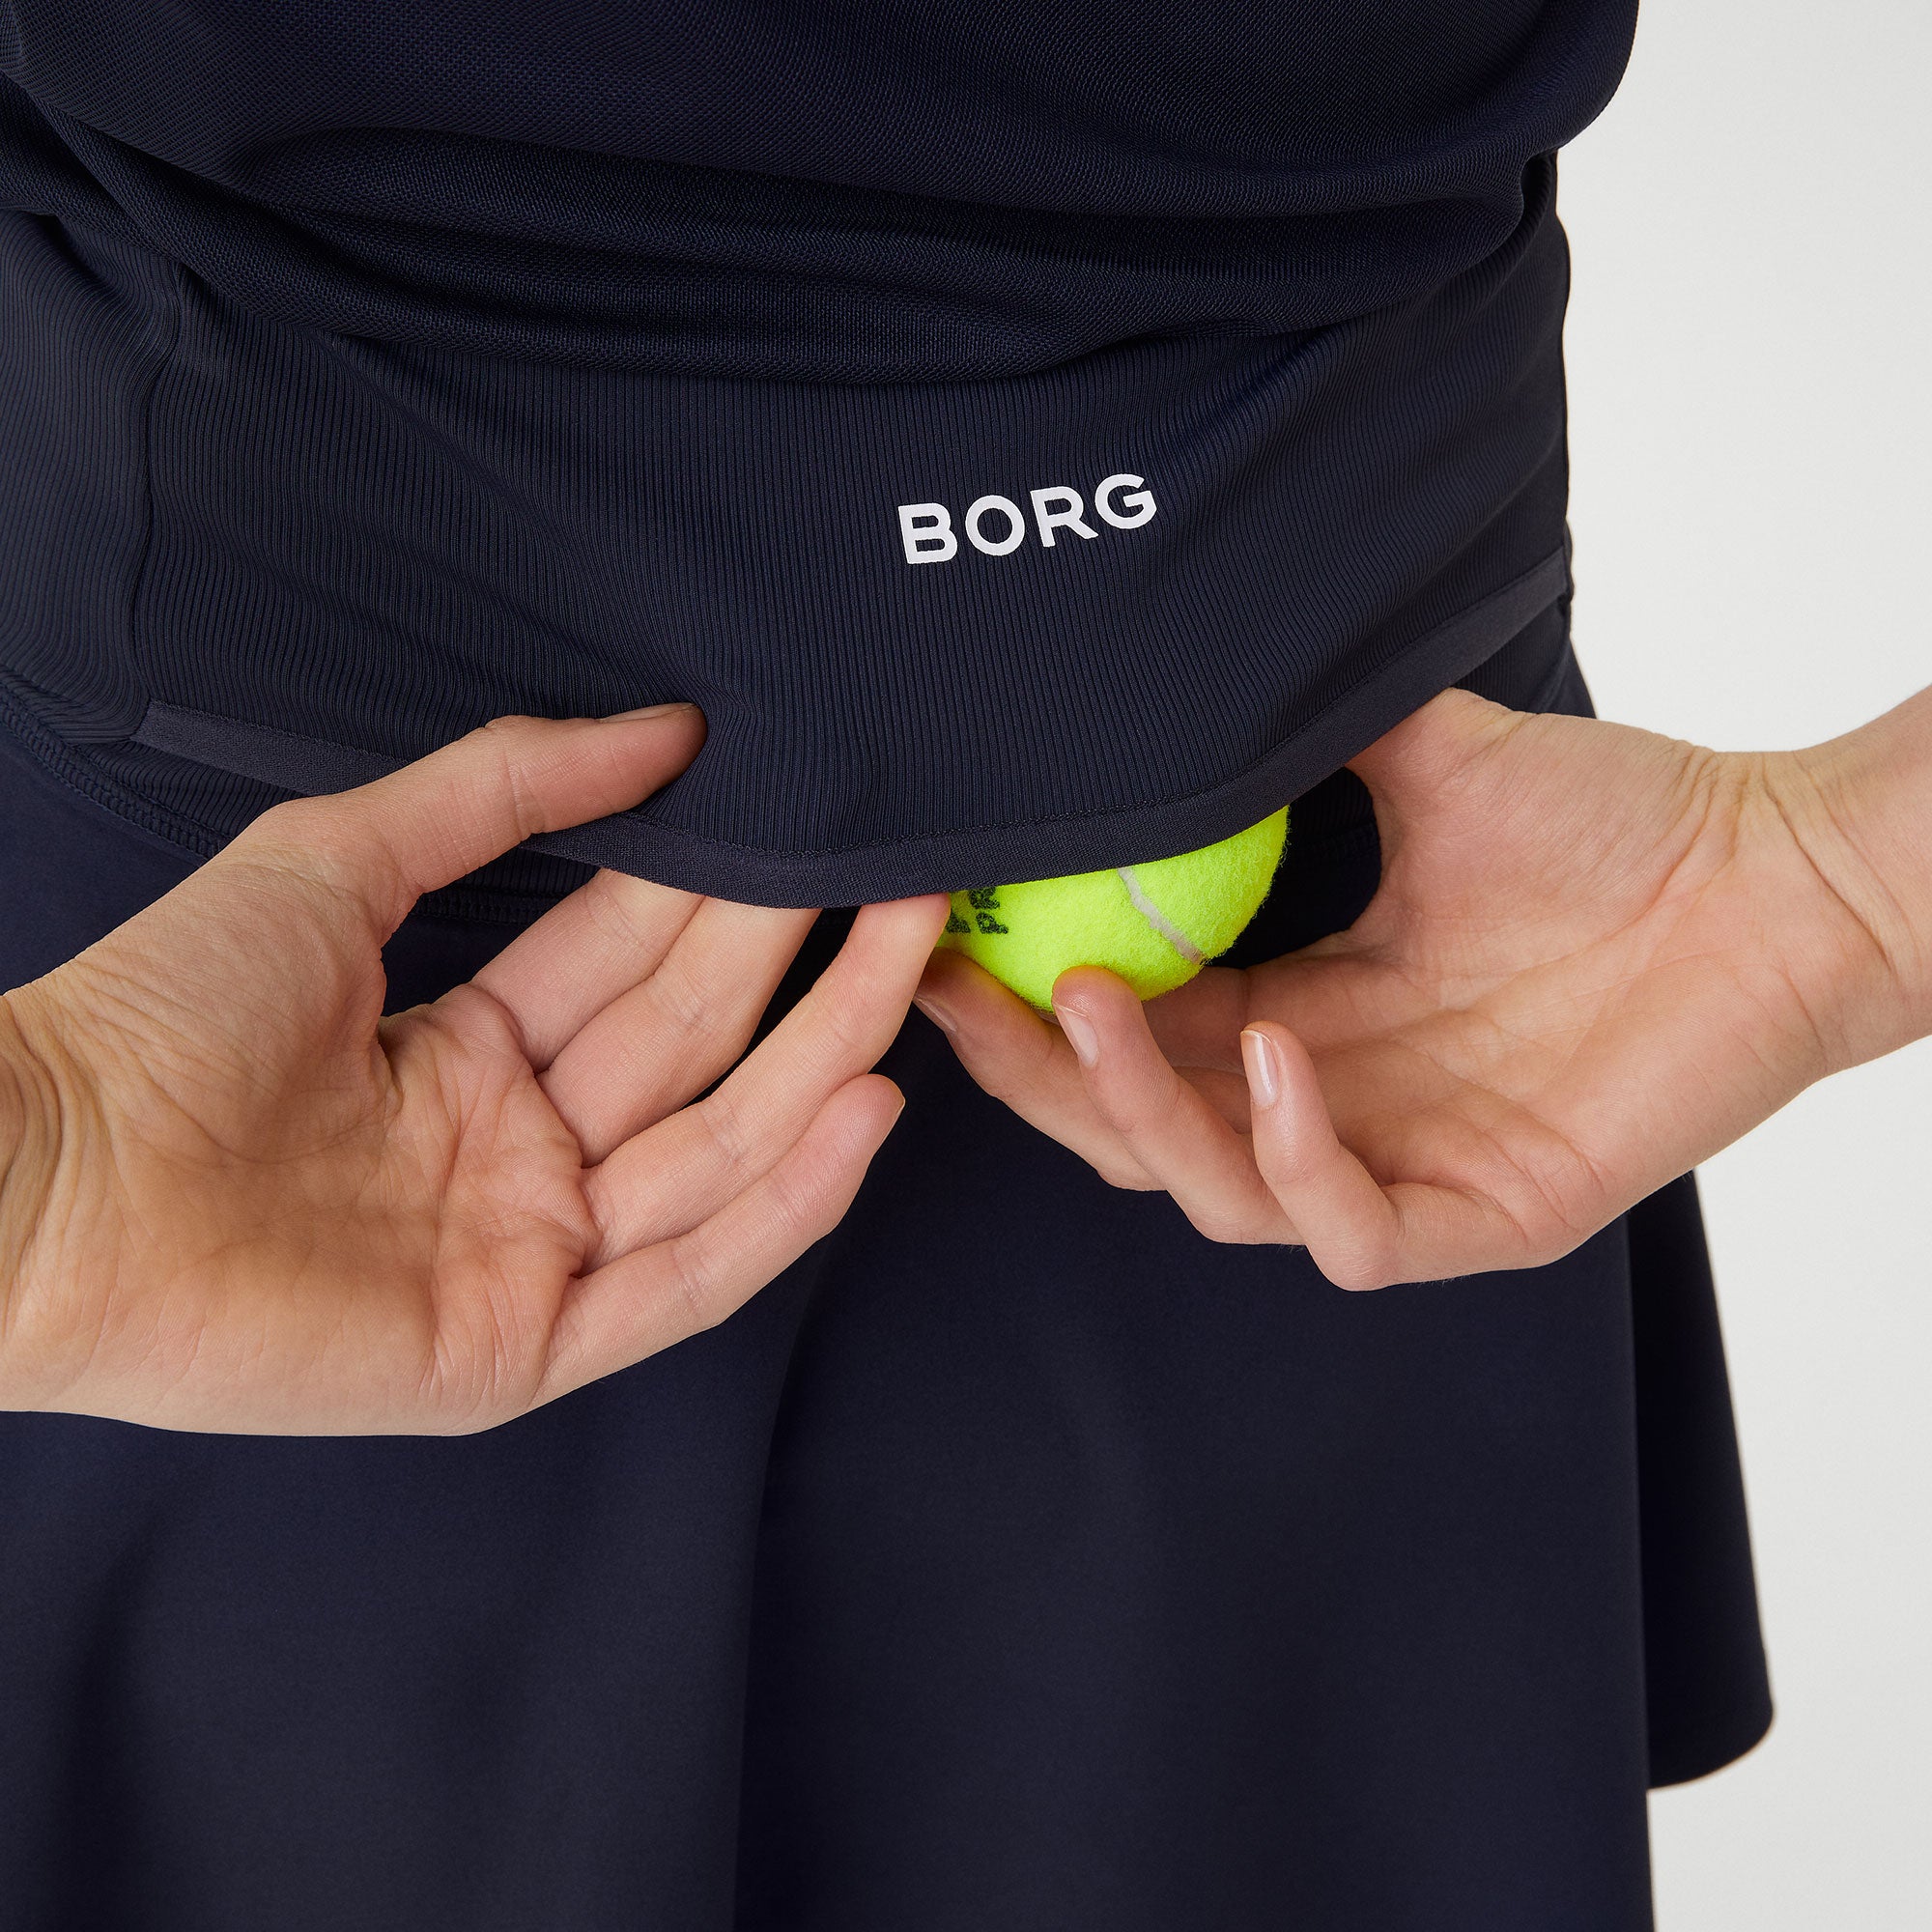 Björn Borg Ace Women's Pocket Tennis Skirt - Dark Blue (4)